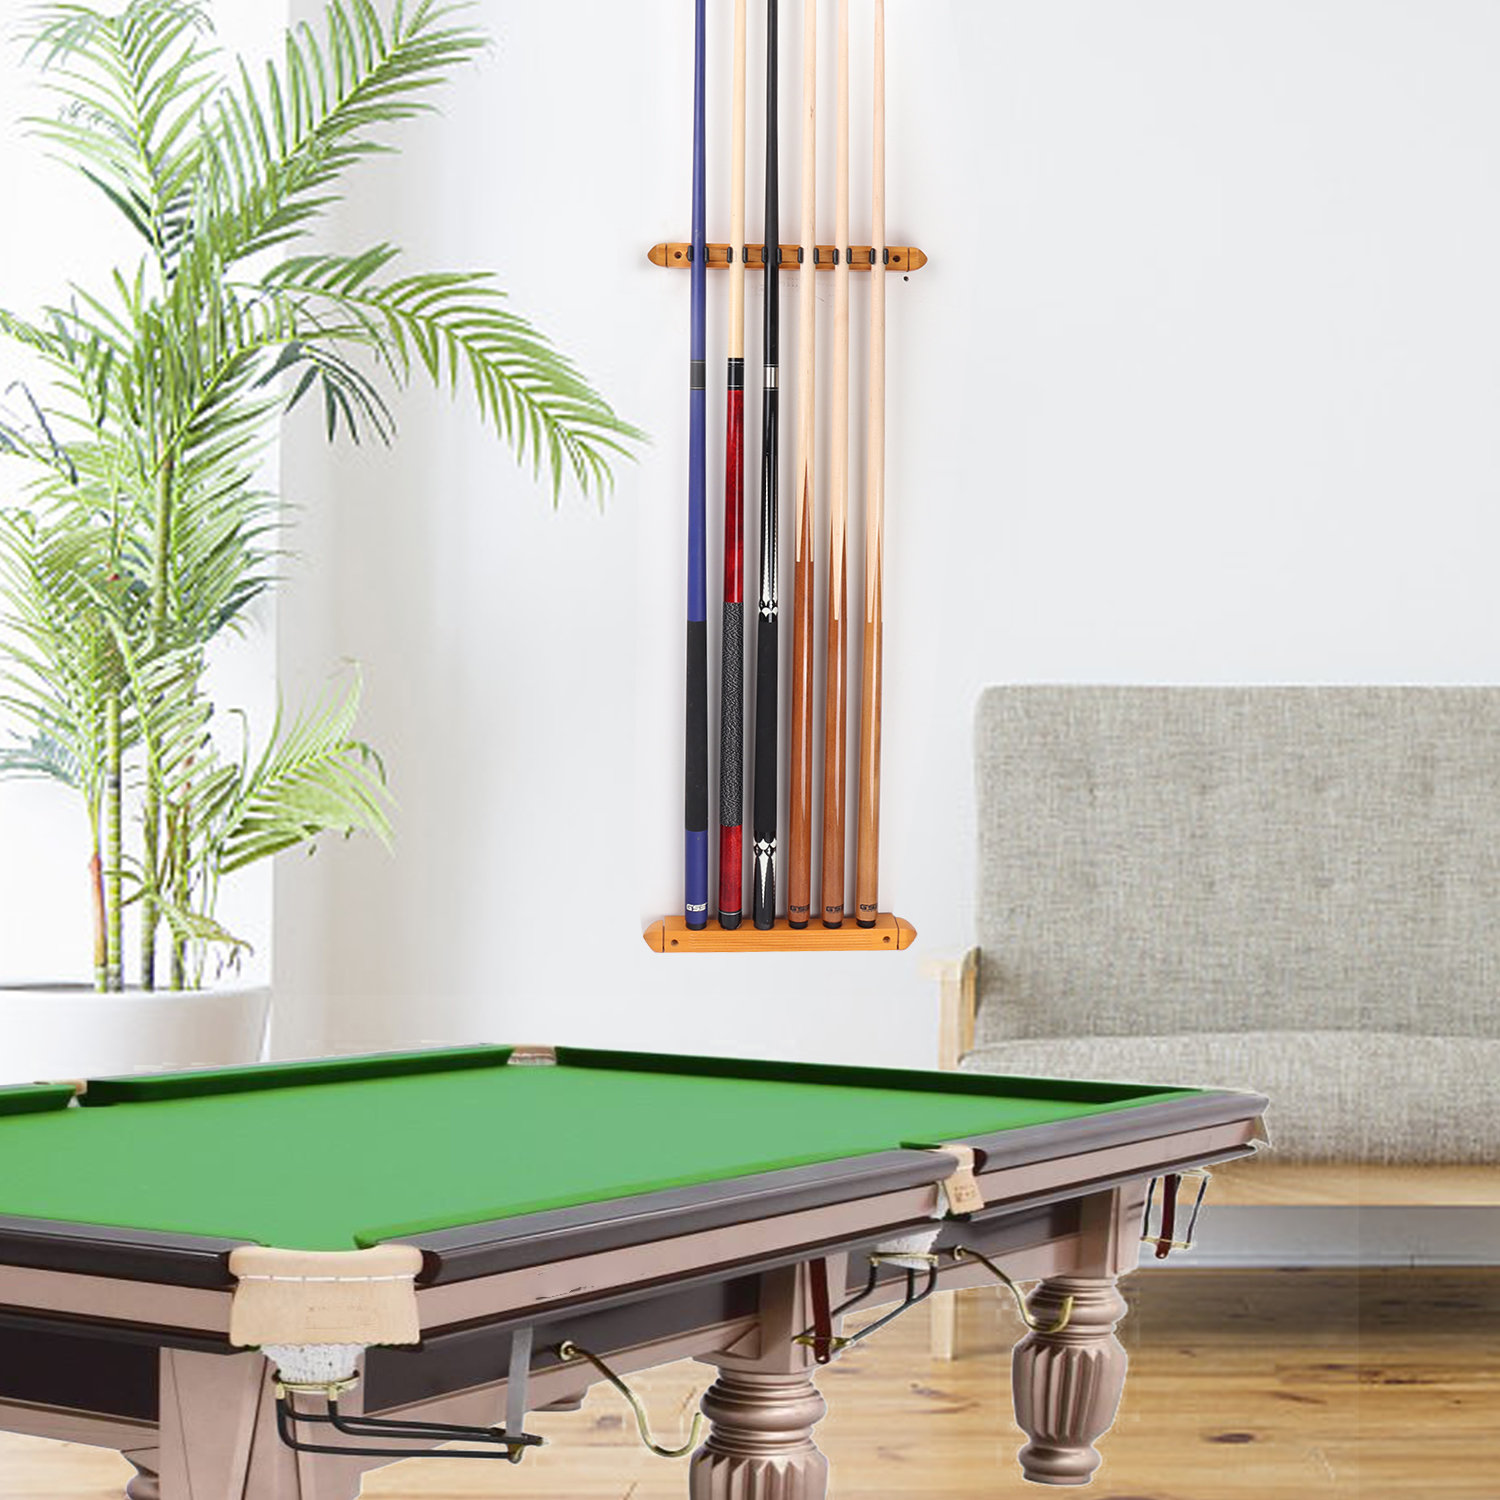 Master Billiard Pool Cue Chalk Premium Quality Blue - 4 pcs - Made in The  USA